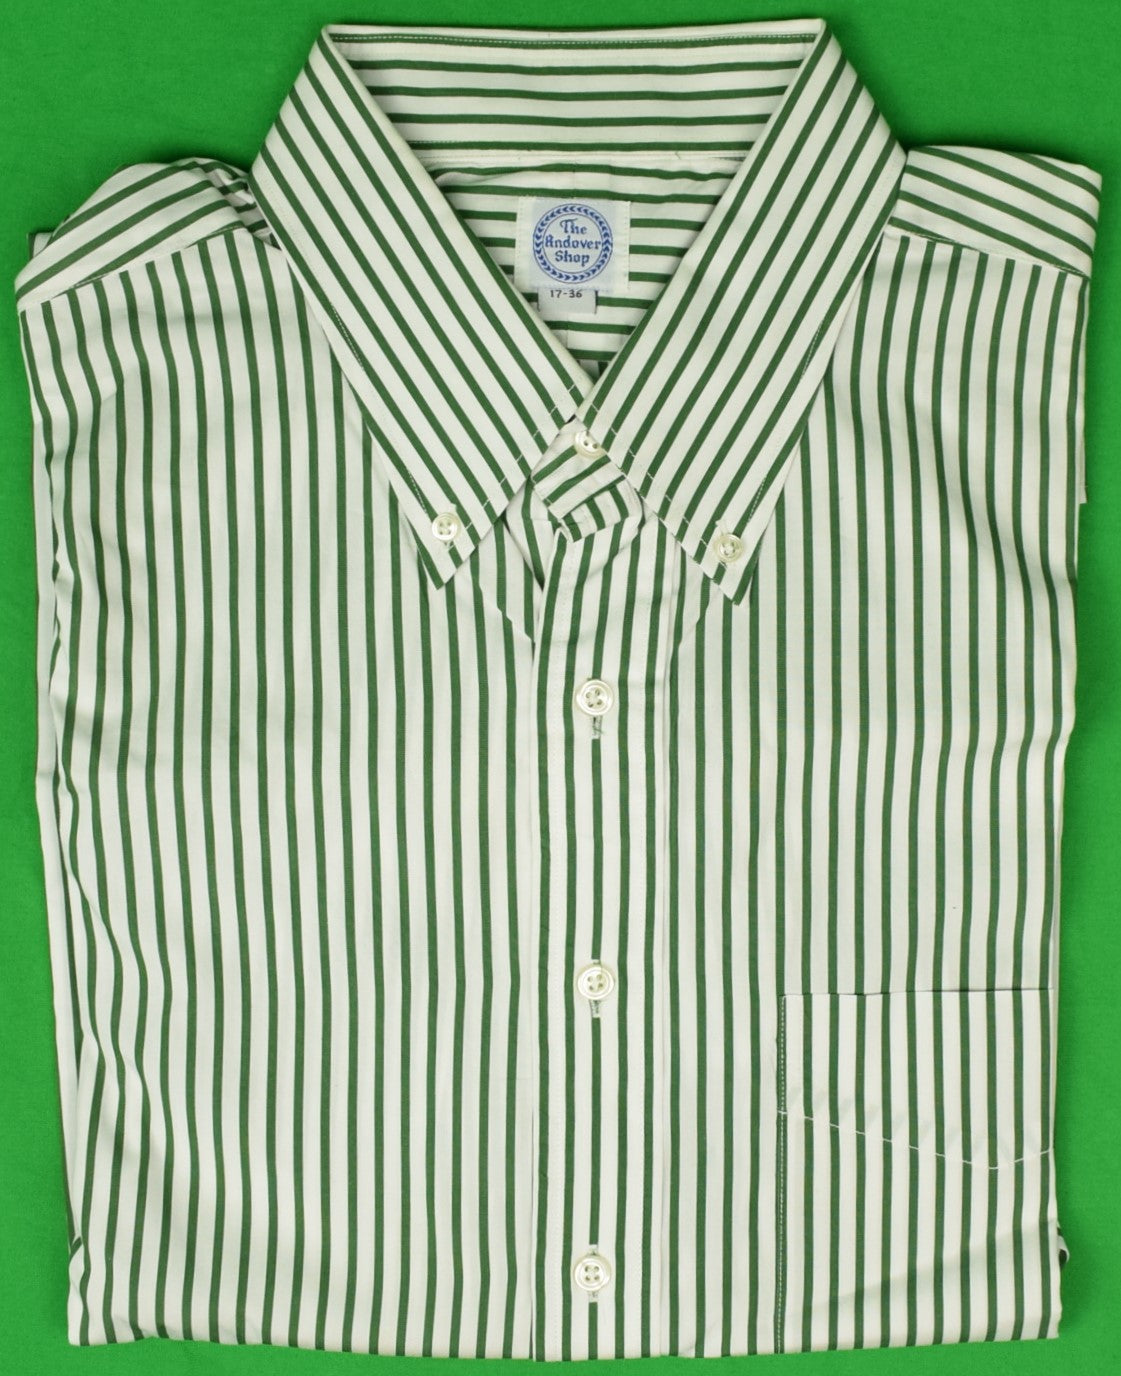 The Andover Shop Green Bengal Stripe Dress Shirt Sz: 17-36